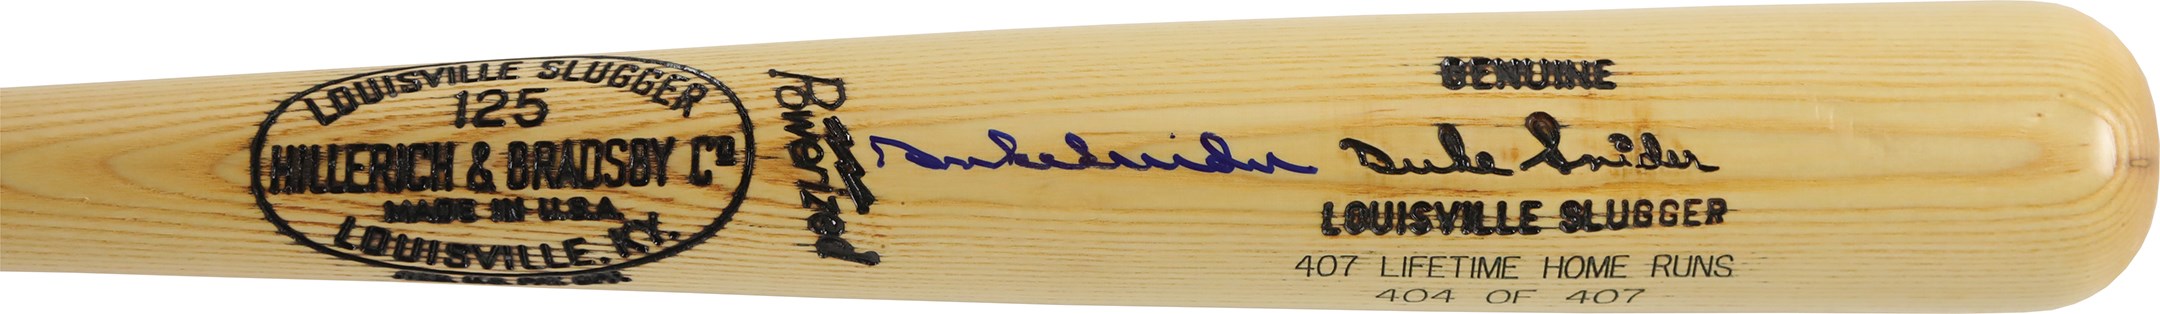 Baseball Autographs - Duke Snider Signed Limited Edition Bat